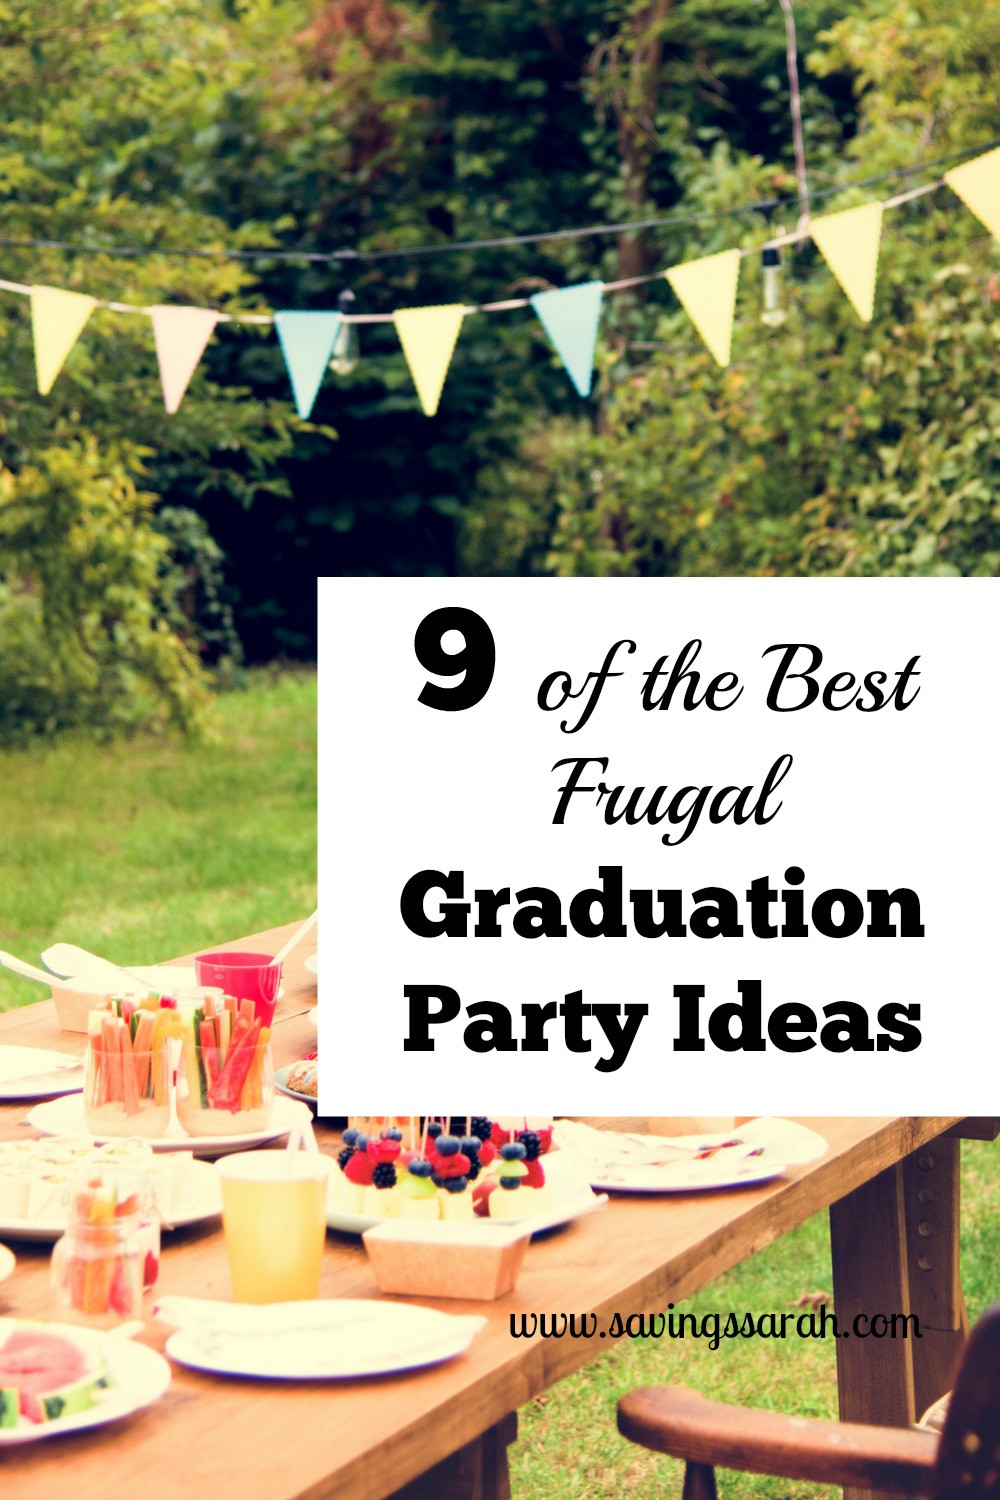 Graduation Party Ideas For A Small Backyard
 9 the Best Frugal Graduation Party Ideas Earning and